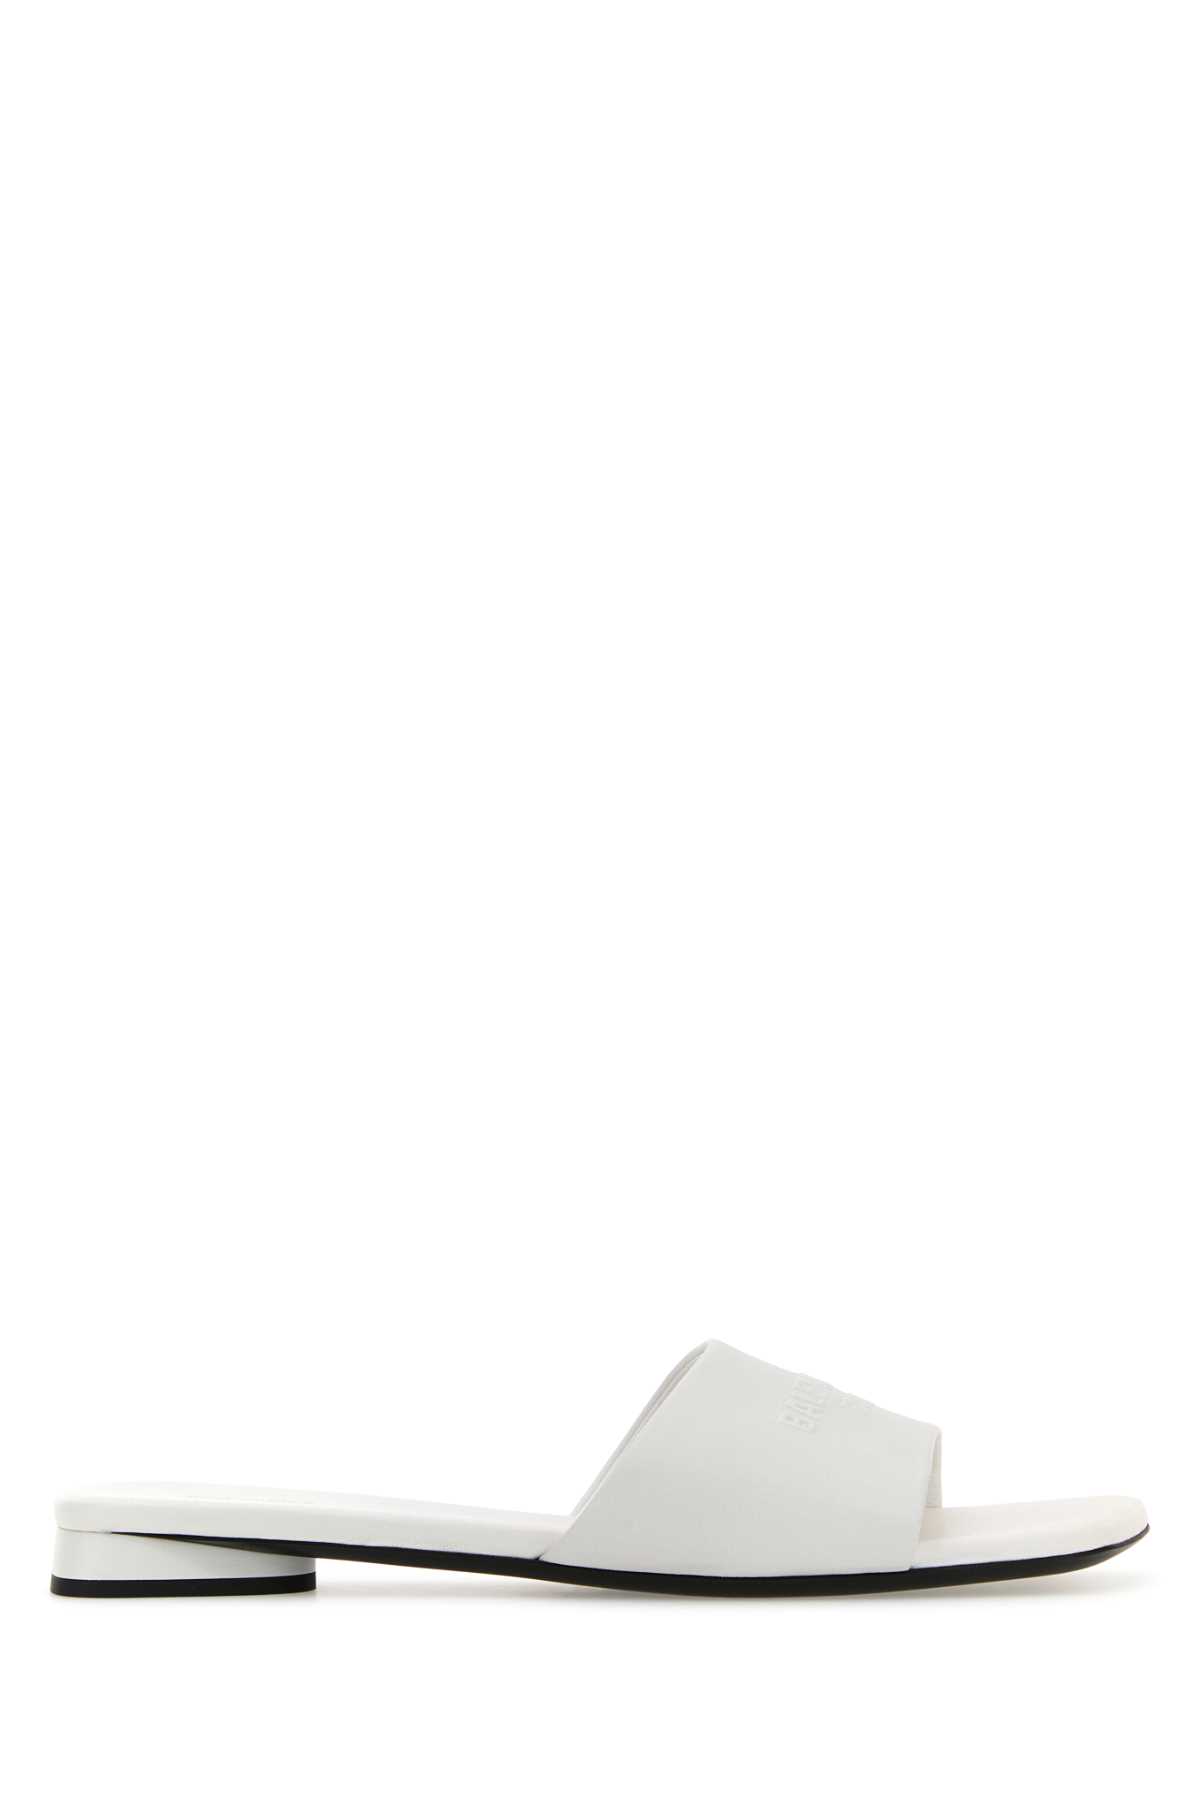 Balenciaga White Leather Duty Free Slippers